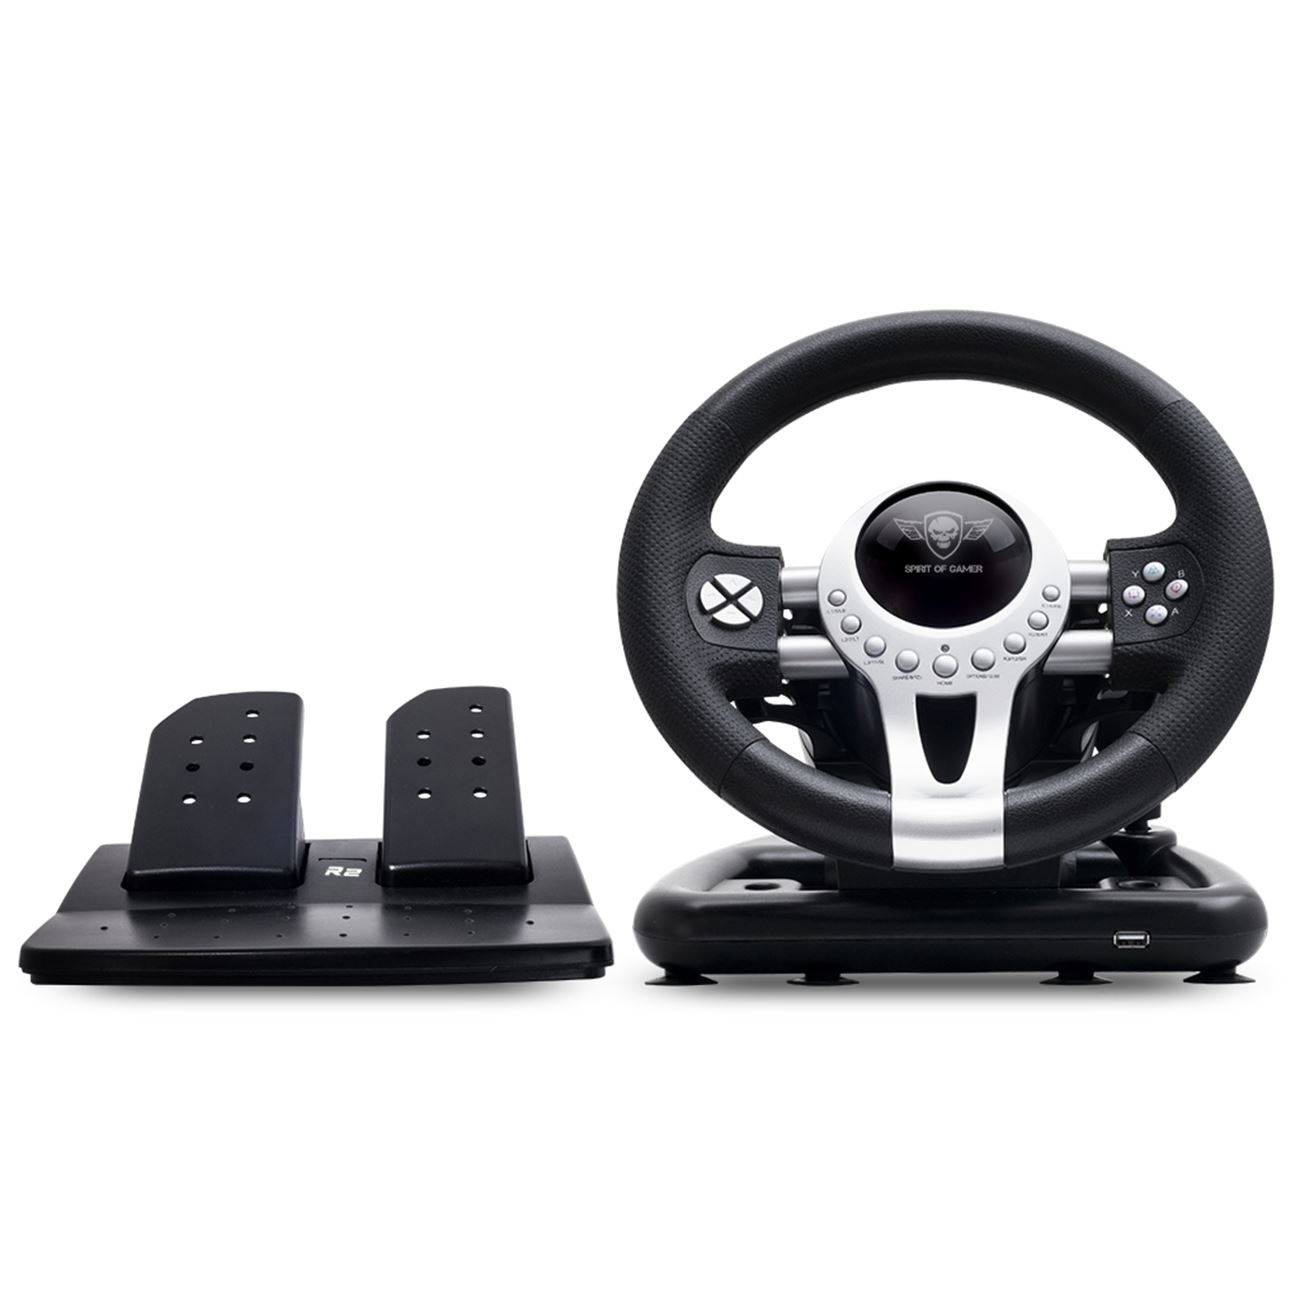 Pro Racing Wheel. Spirit of Gamer Race Wheel Pro. Microcon 2 Racing Wheel and Pedals отзывы владельцев. Картинг Gamer на все устройства. Игра racing wheel